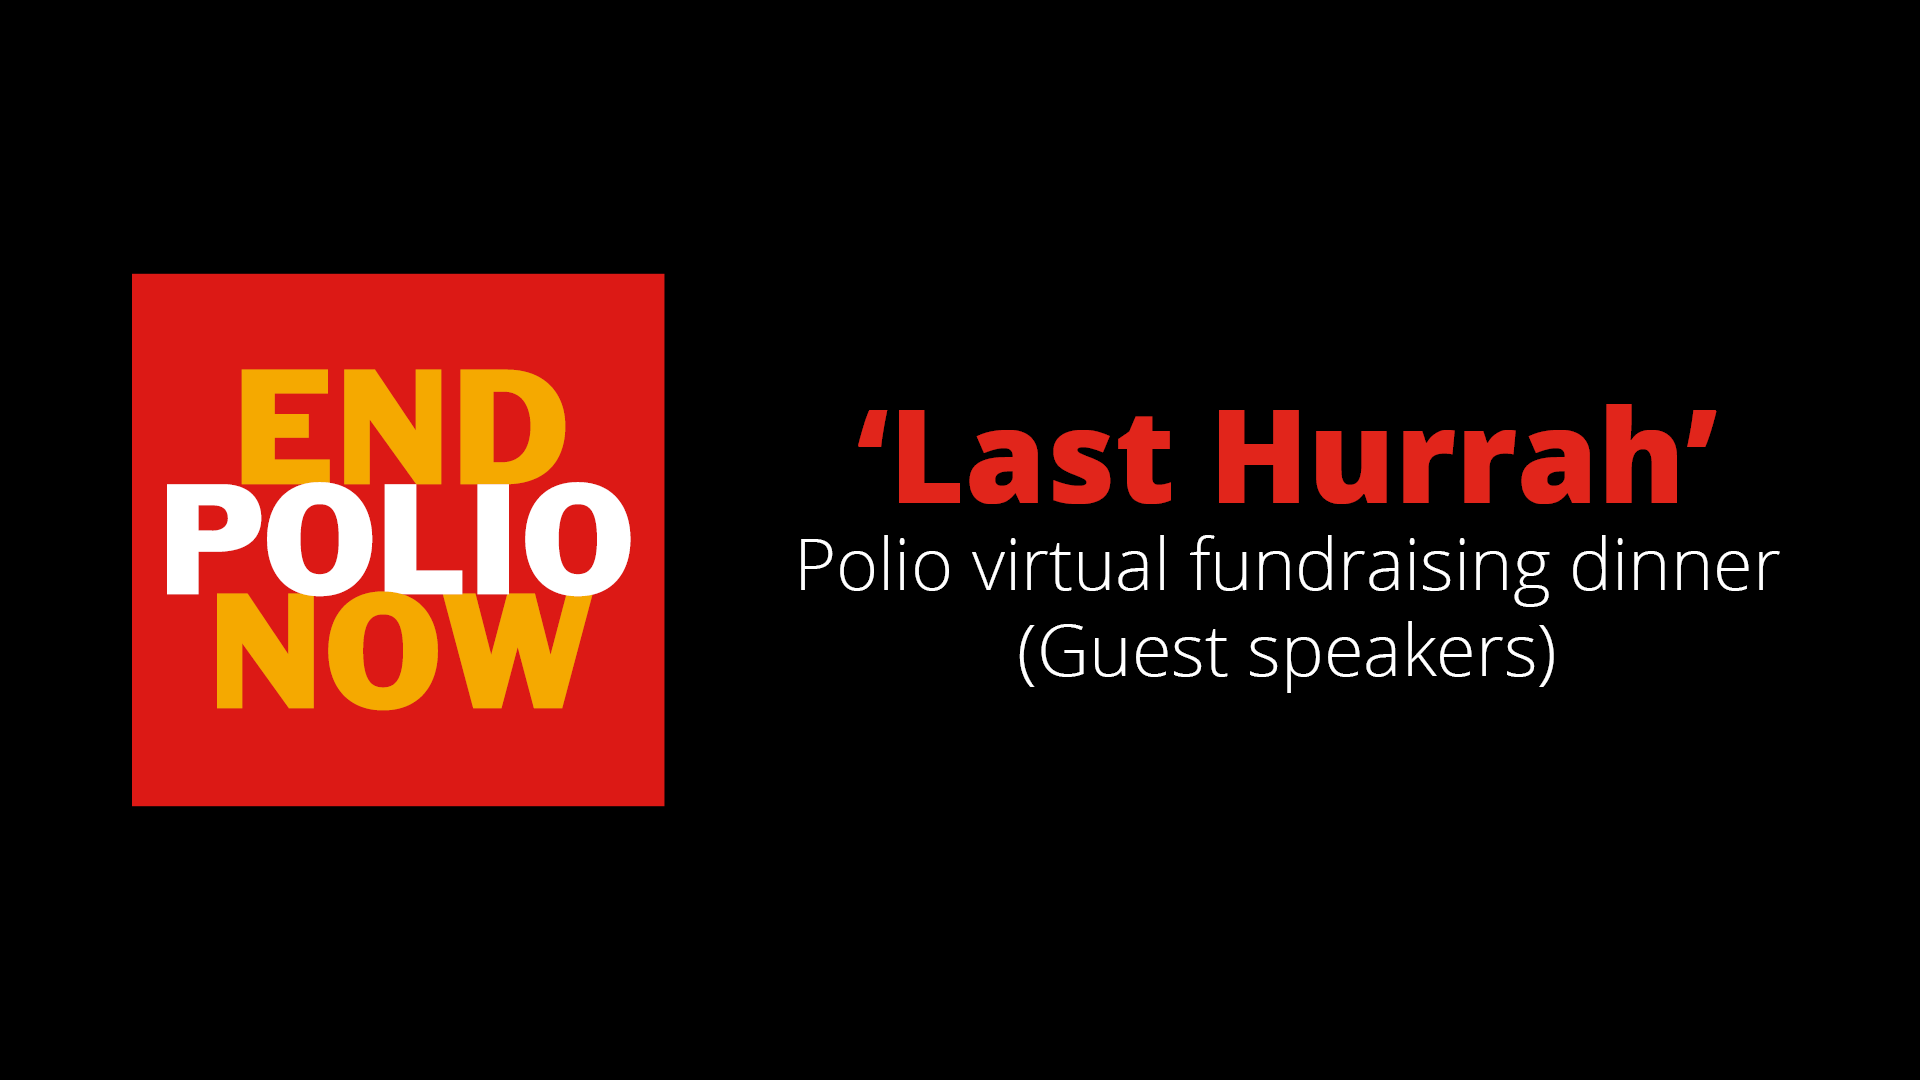 Part 01 (Guest speakers) of the ‘Last Hurrah’ Polio virtual fundraising dinner